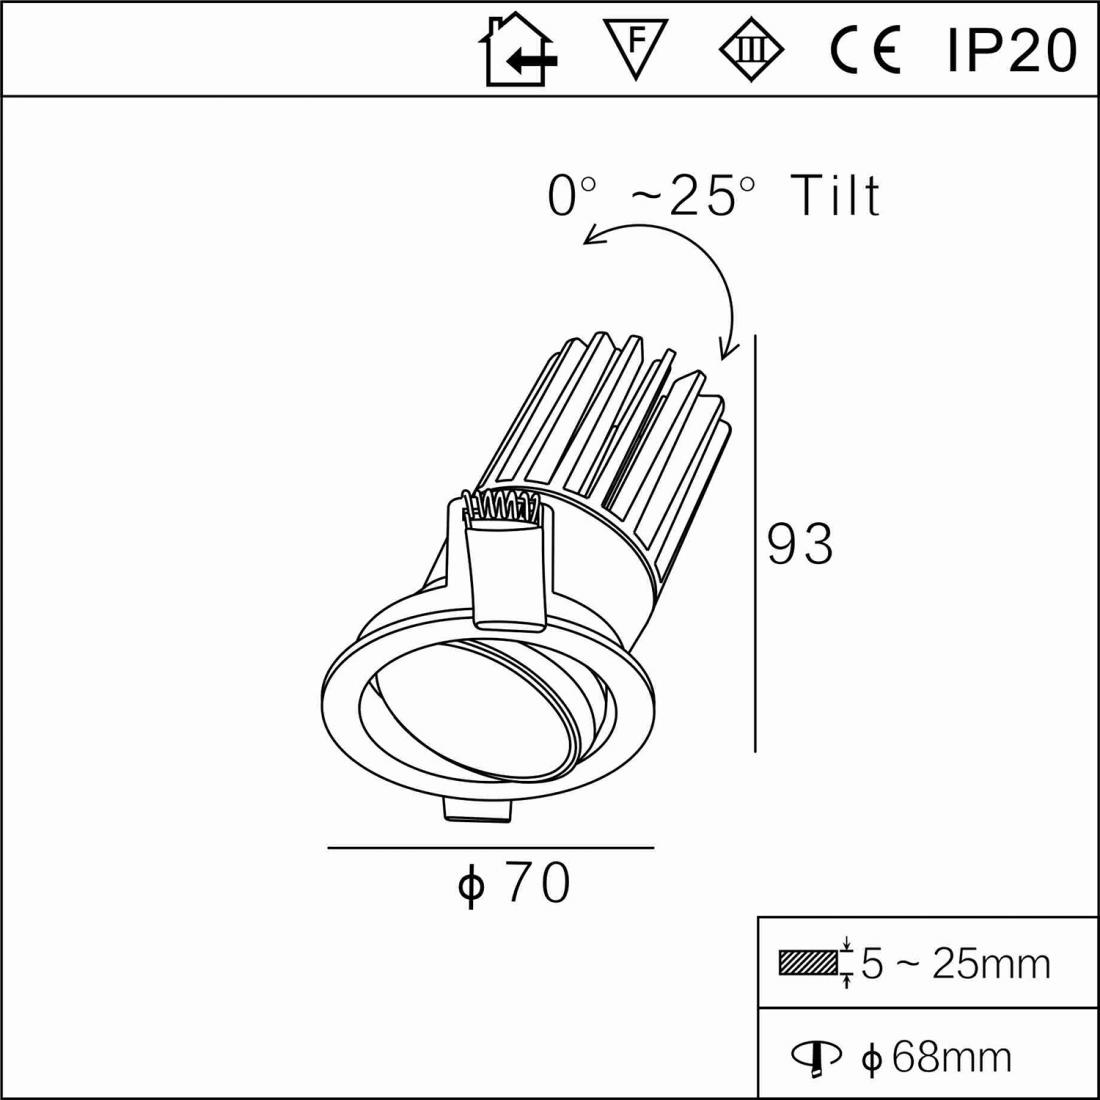 10W tinny anti-glare adjustable LED recessed downlight 